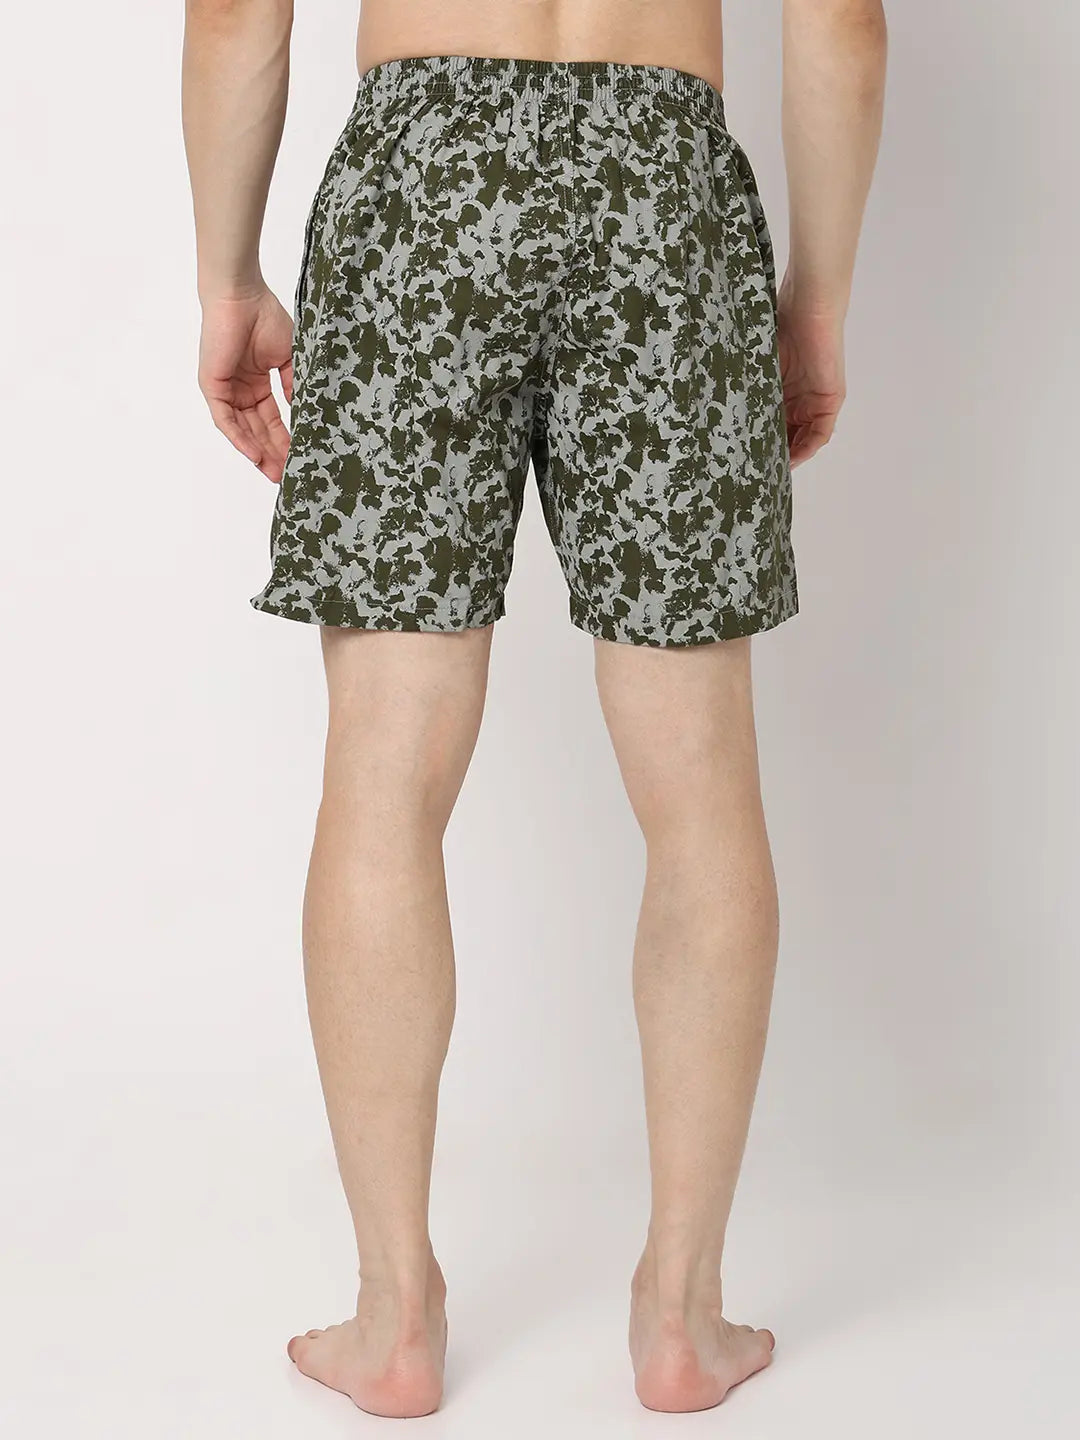 Underjeans by Spykar Men Premium Green Cotton Blend Regular Fit Boxer Shorts